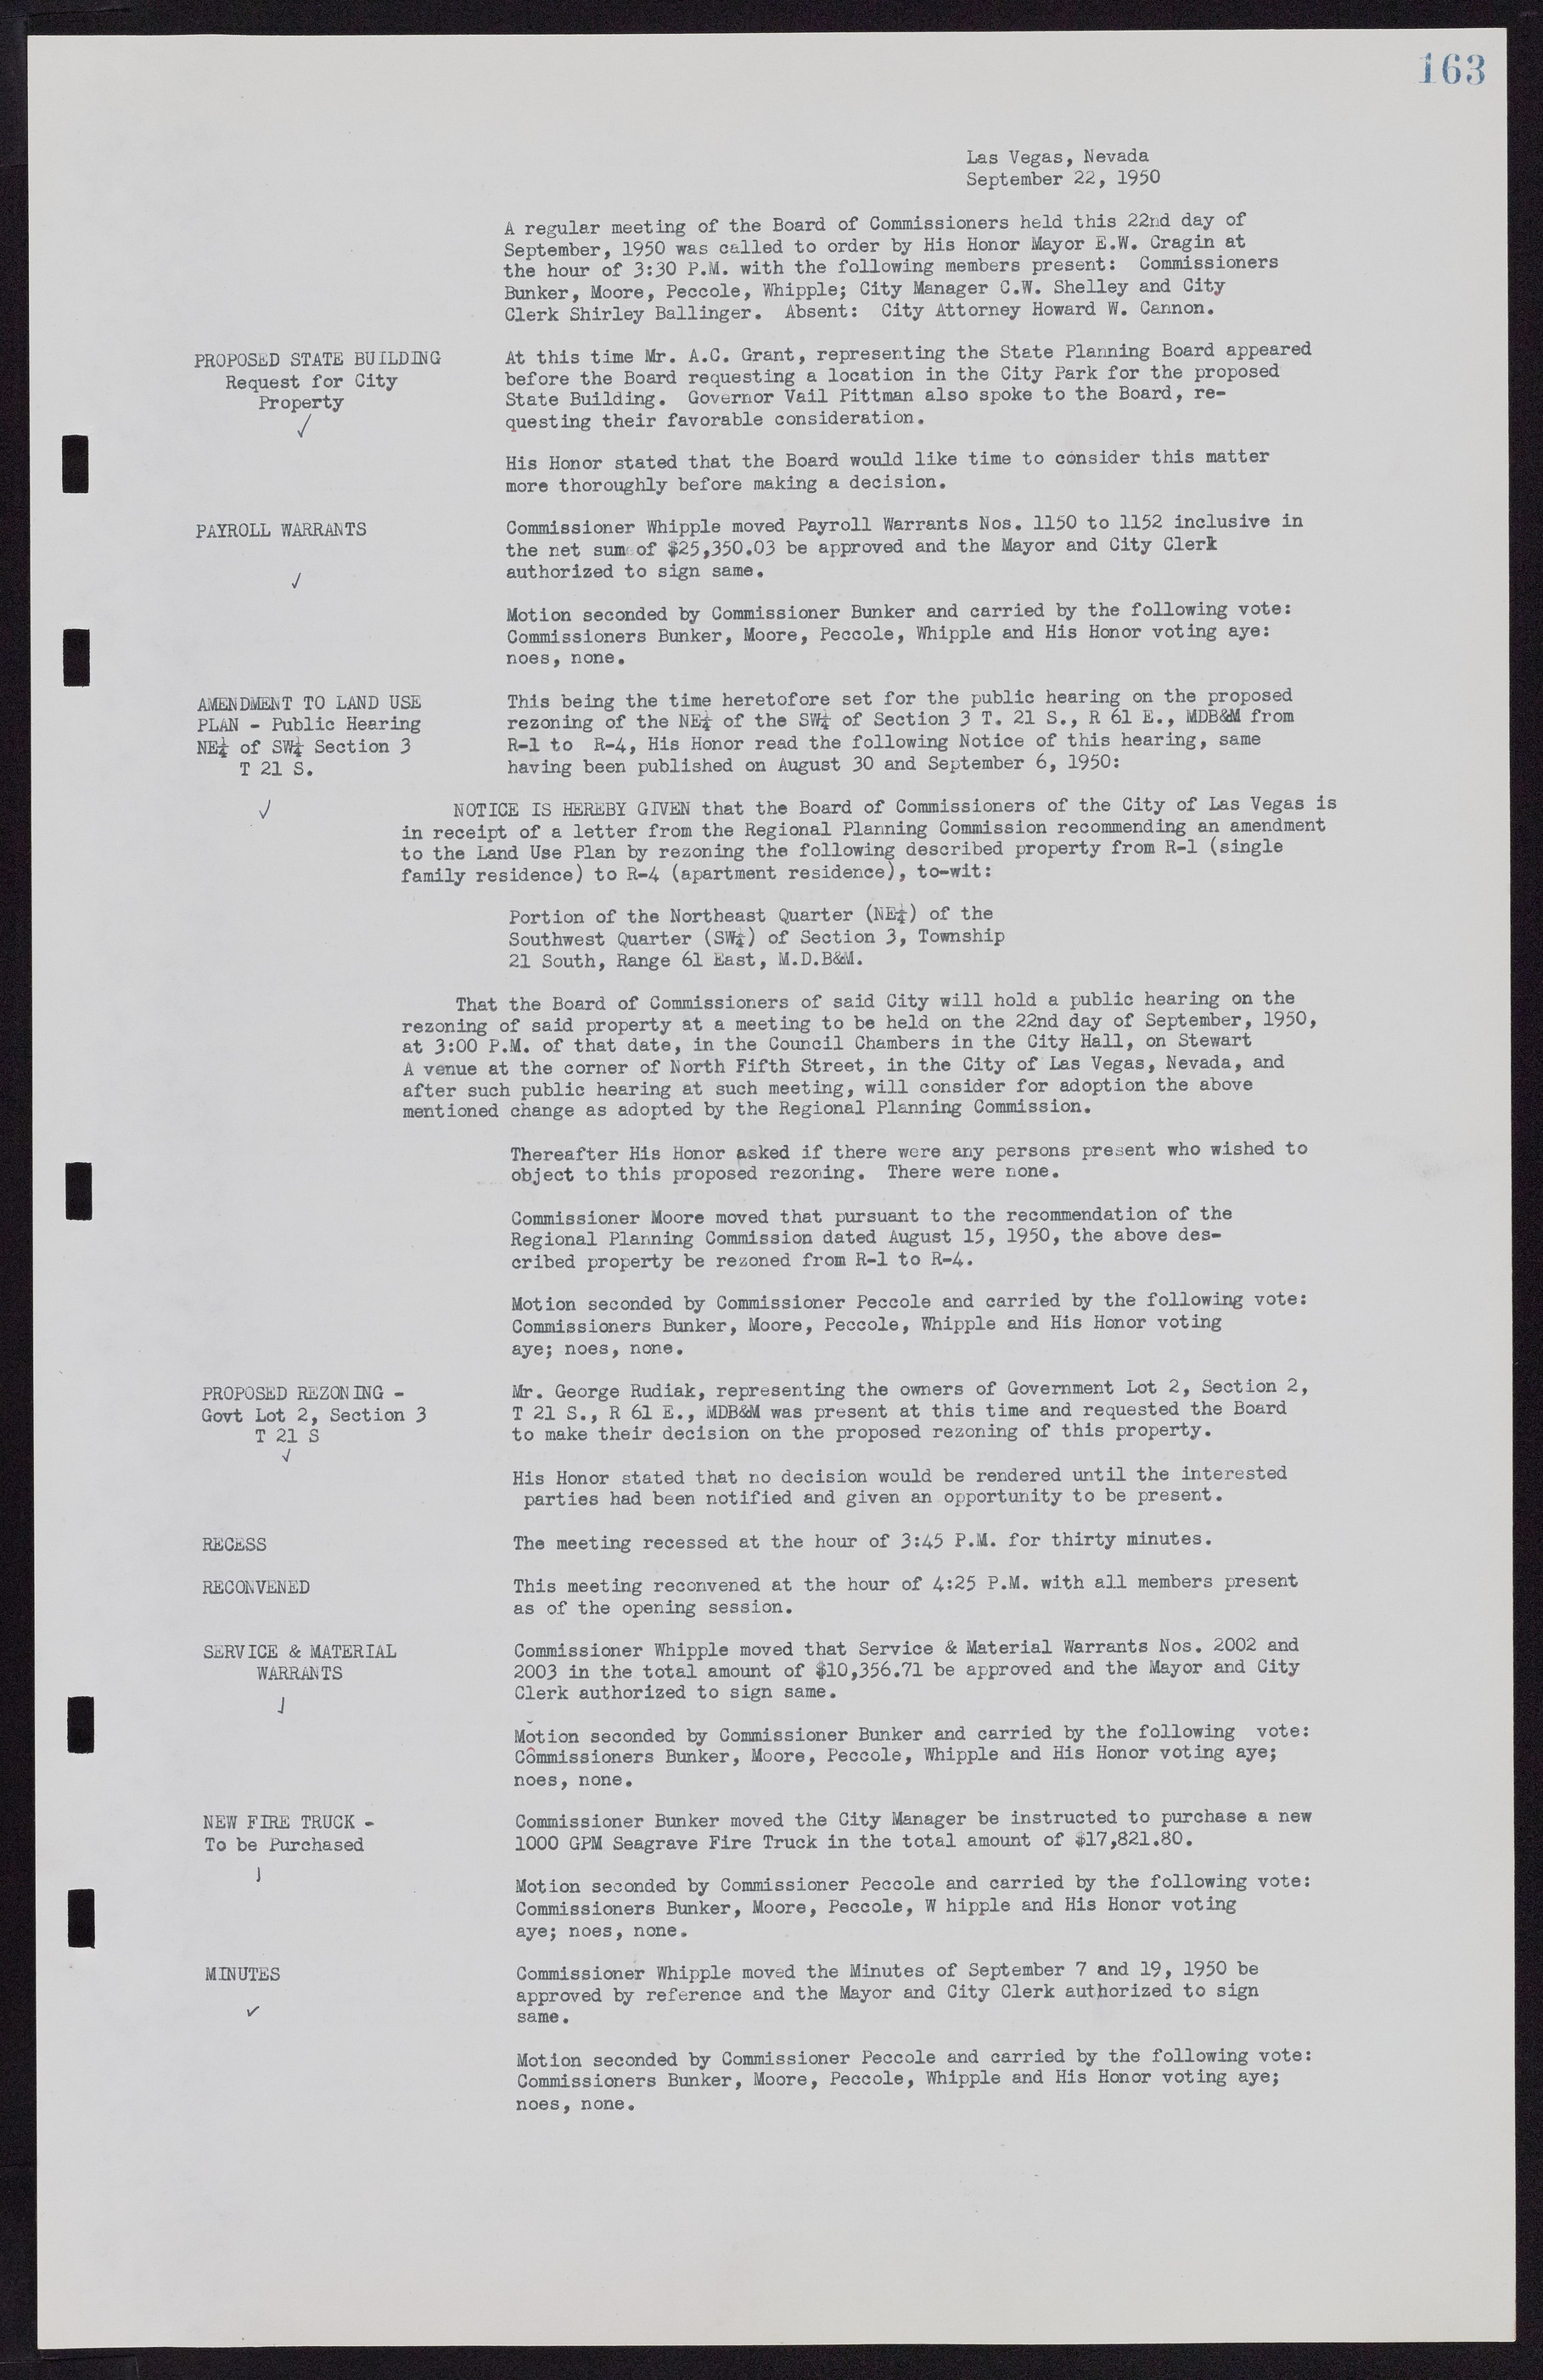 Las Vegas City Commission Minutes, November 7, 1949 to May 21, 1952, lvc000007-173